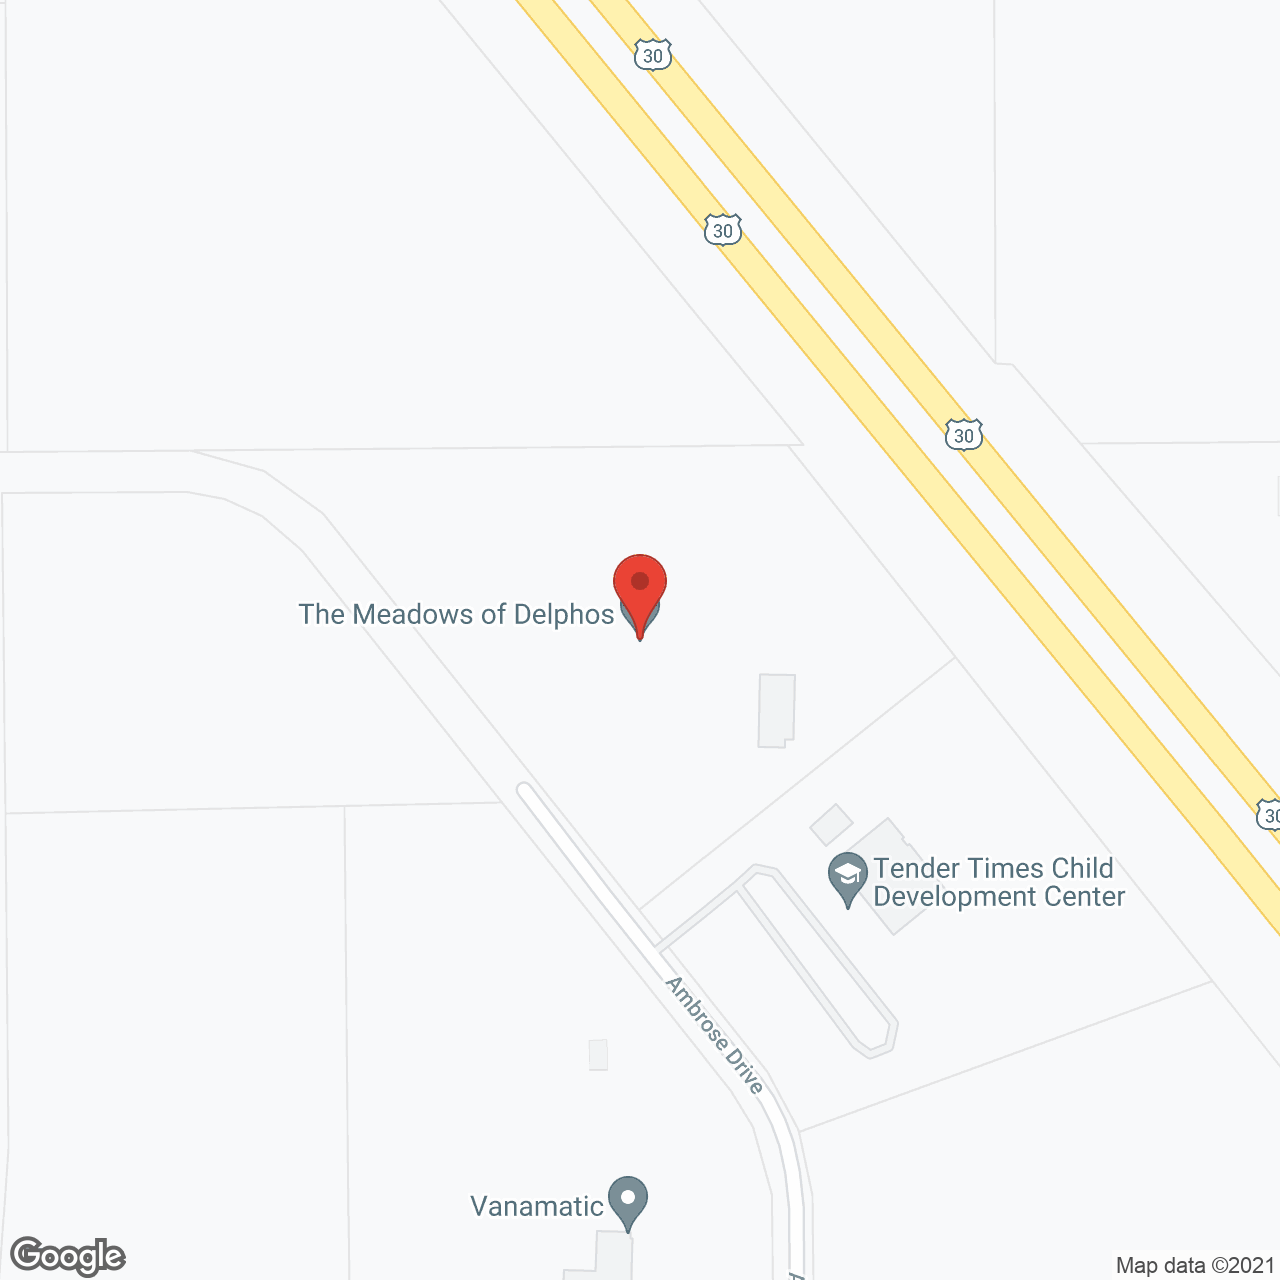 The Meadows of Delphos in google map